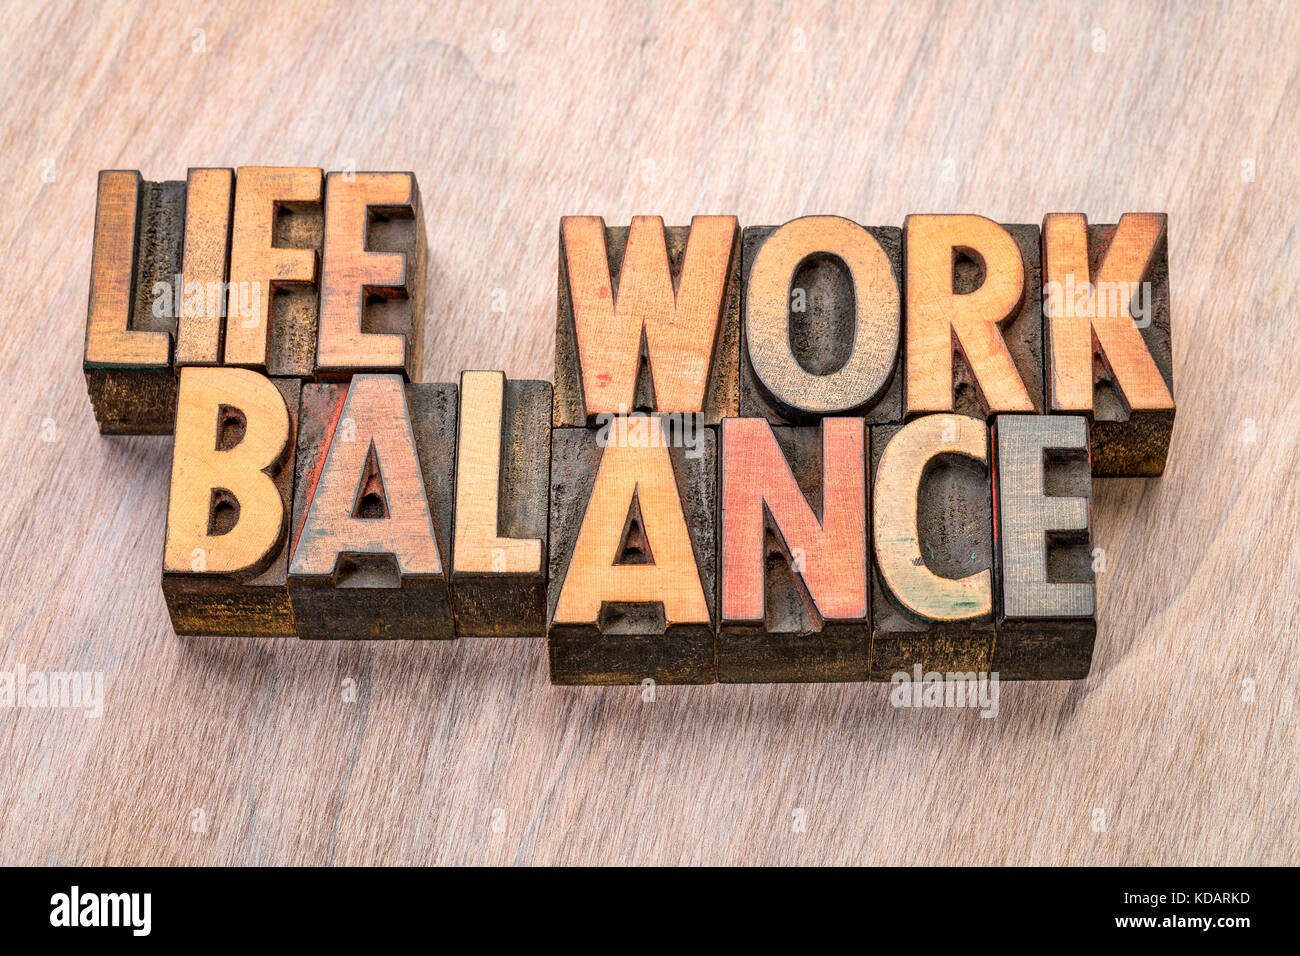 life work balance  - word abstract in vintage letterpress wood type printing blocks Stock Photo